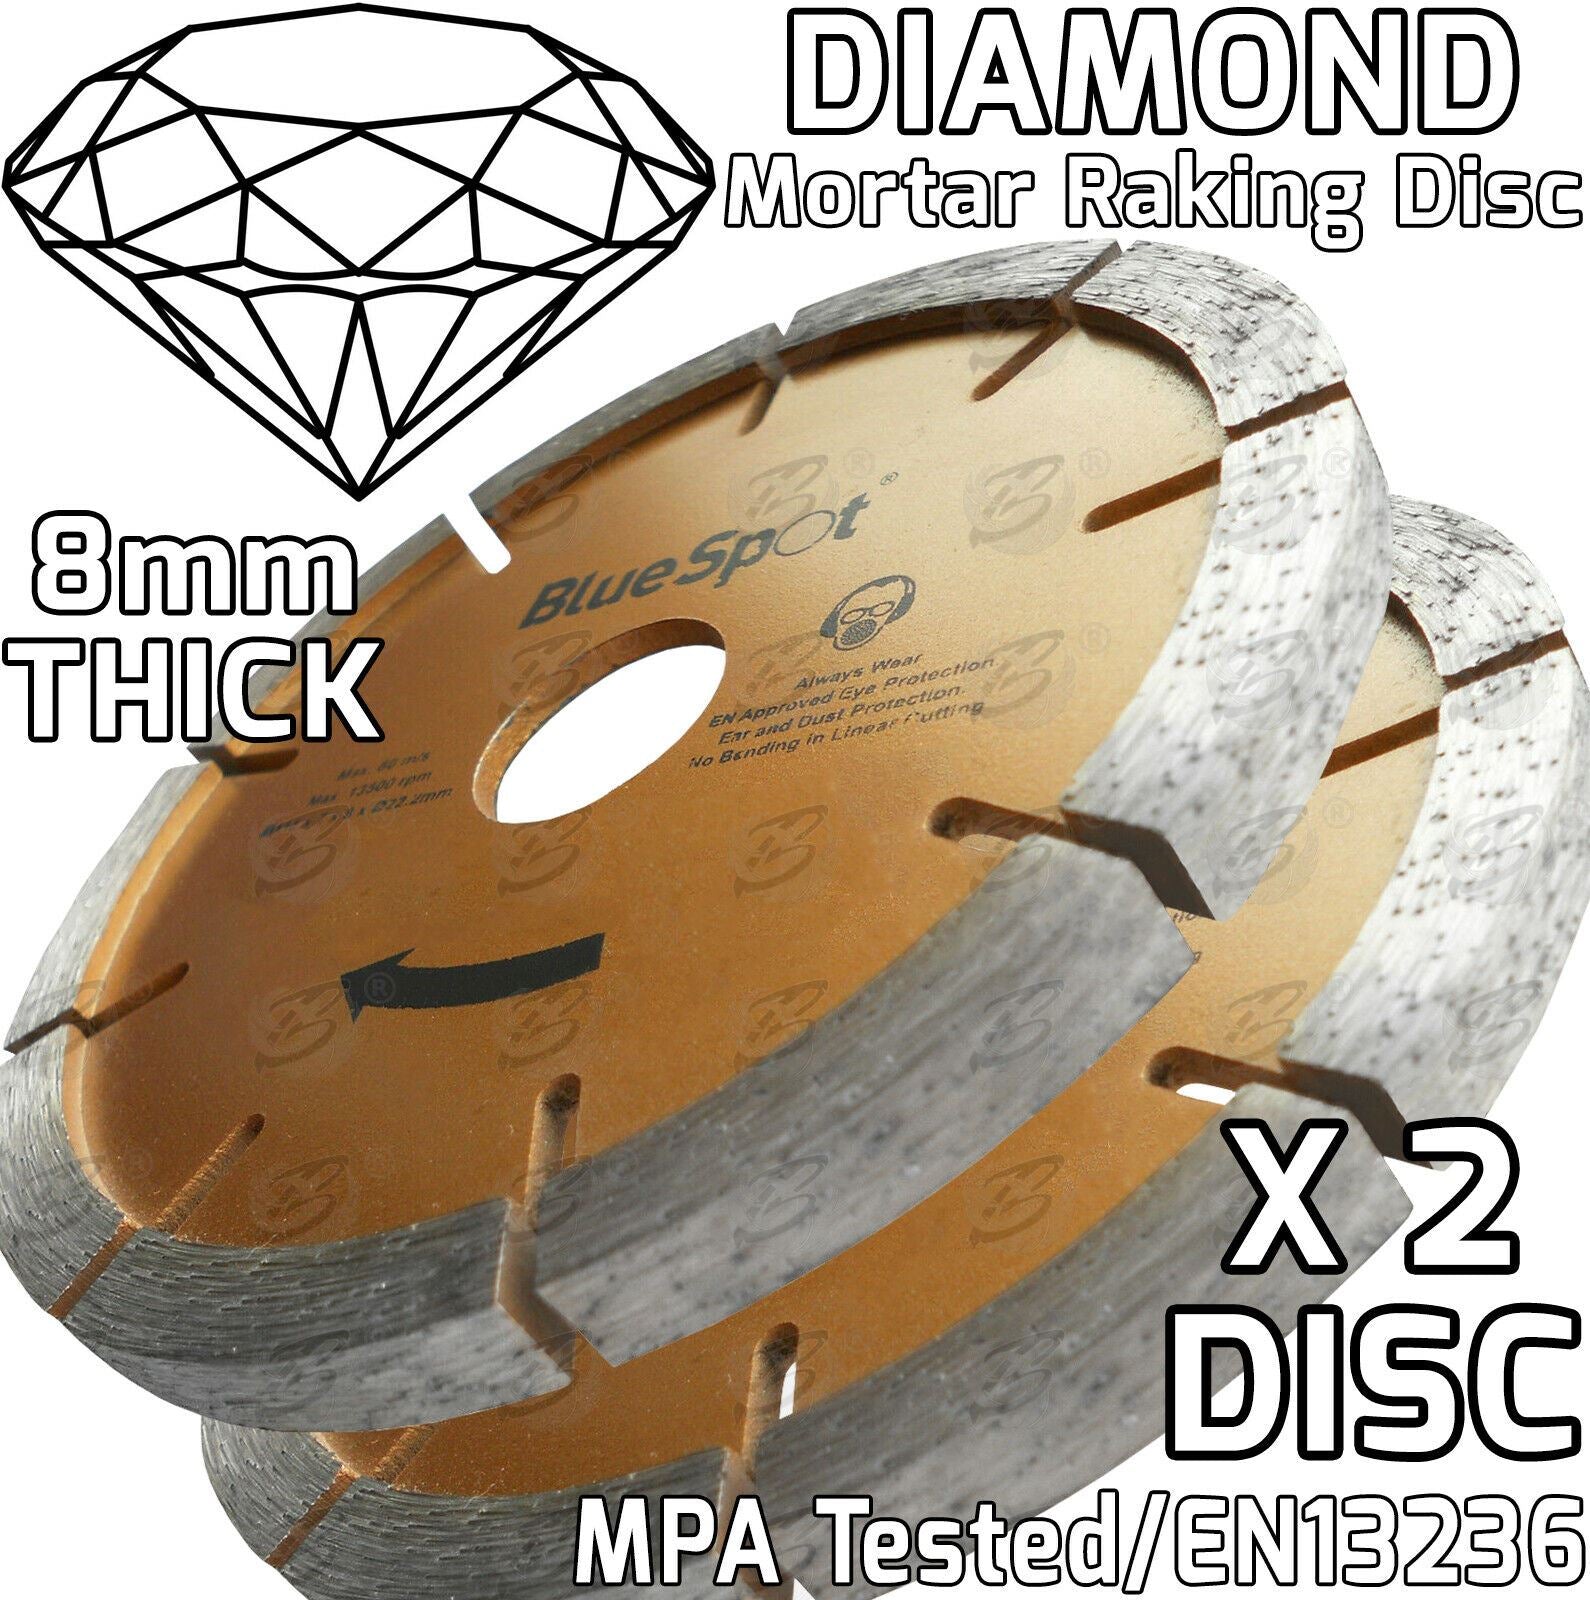 BLUESPOT 4.5" ( 115MM ) DIAMOND MORTAR RAKING DISC ( x 2 )